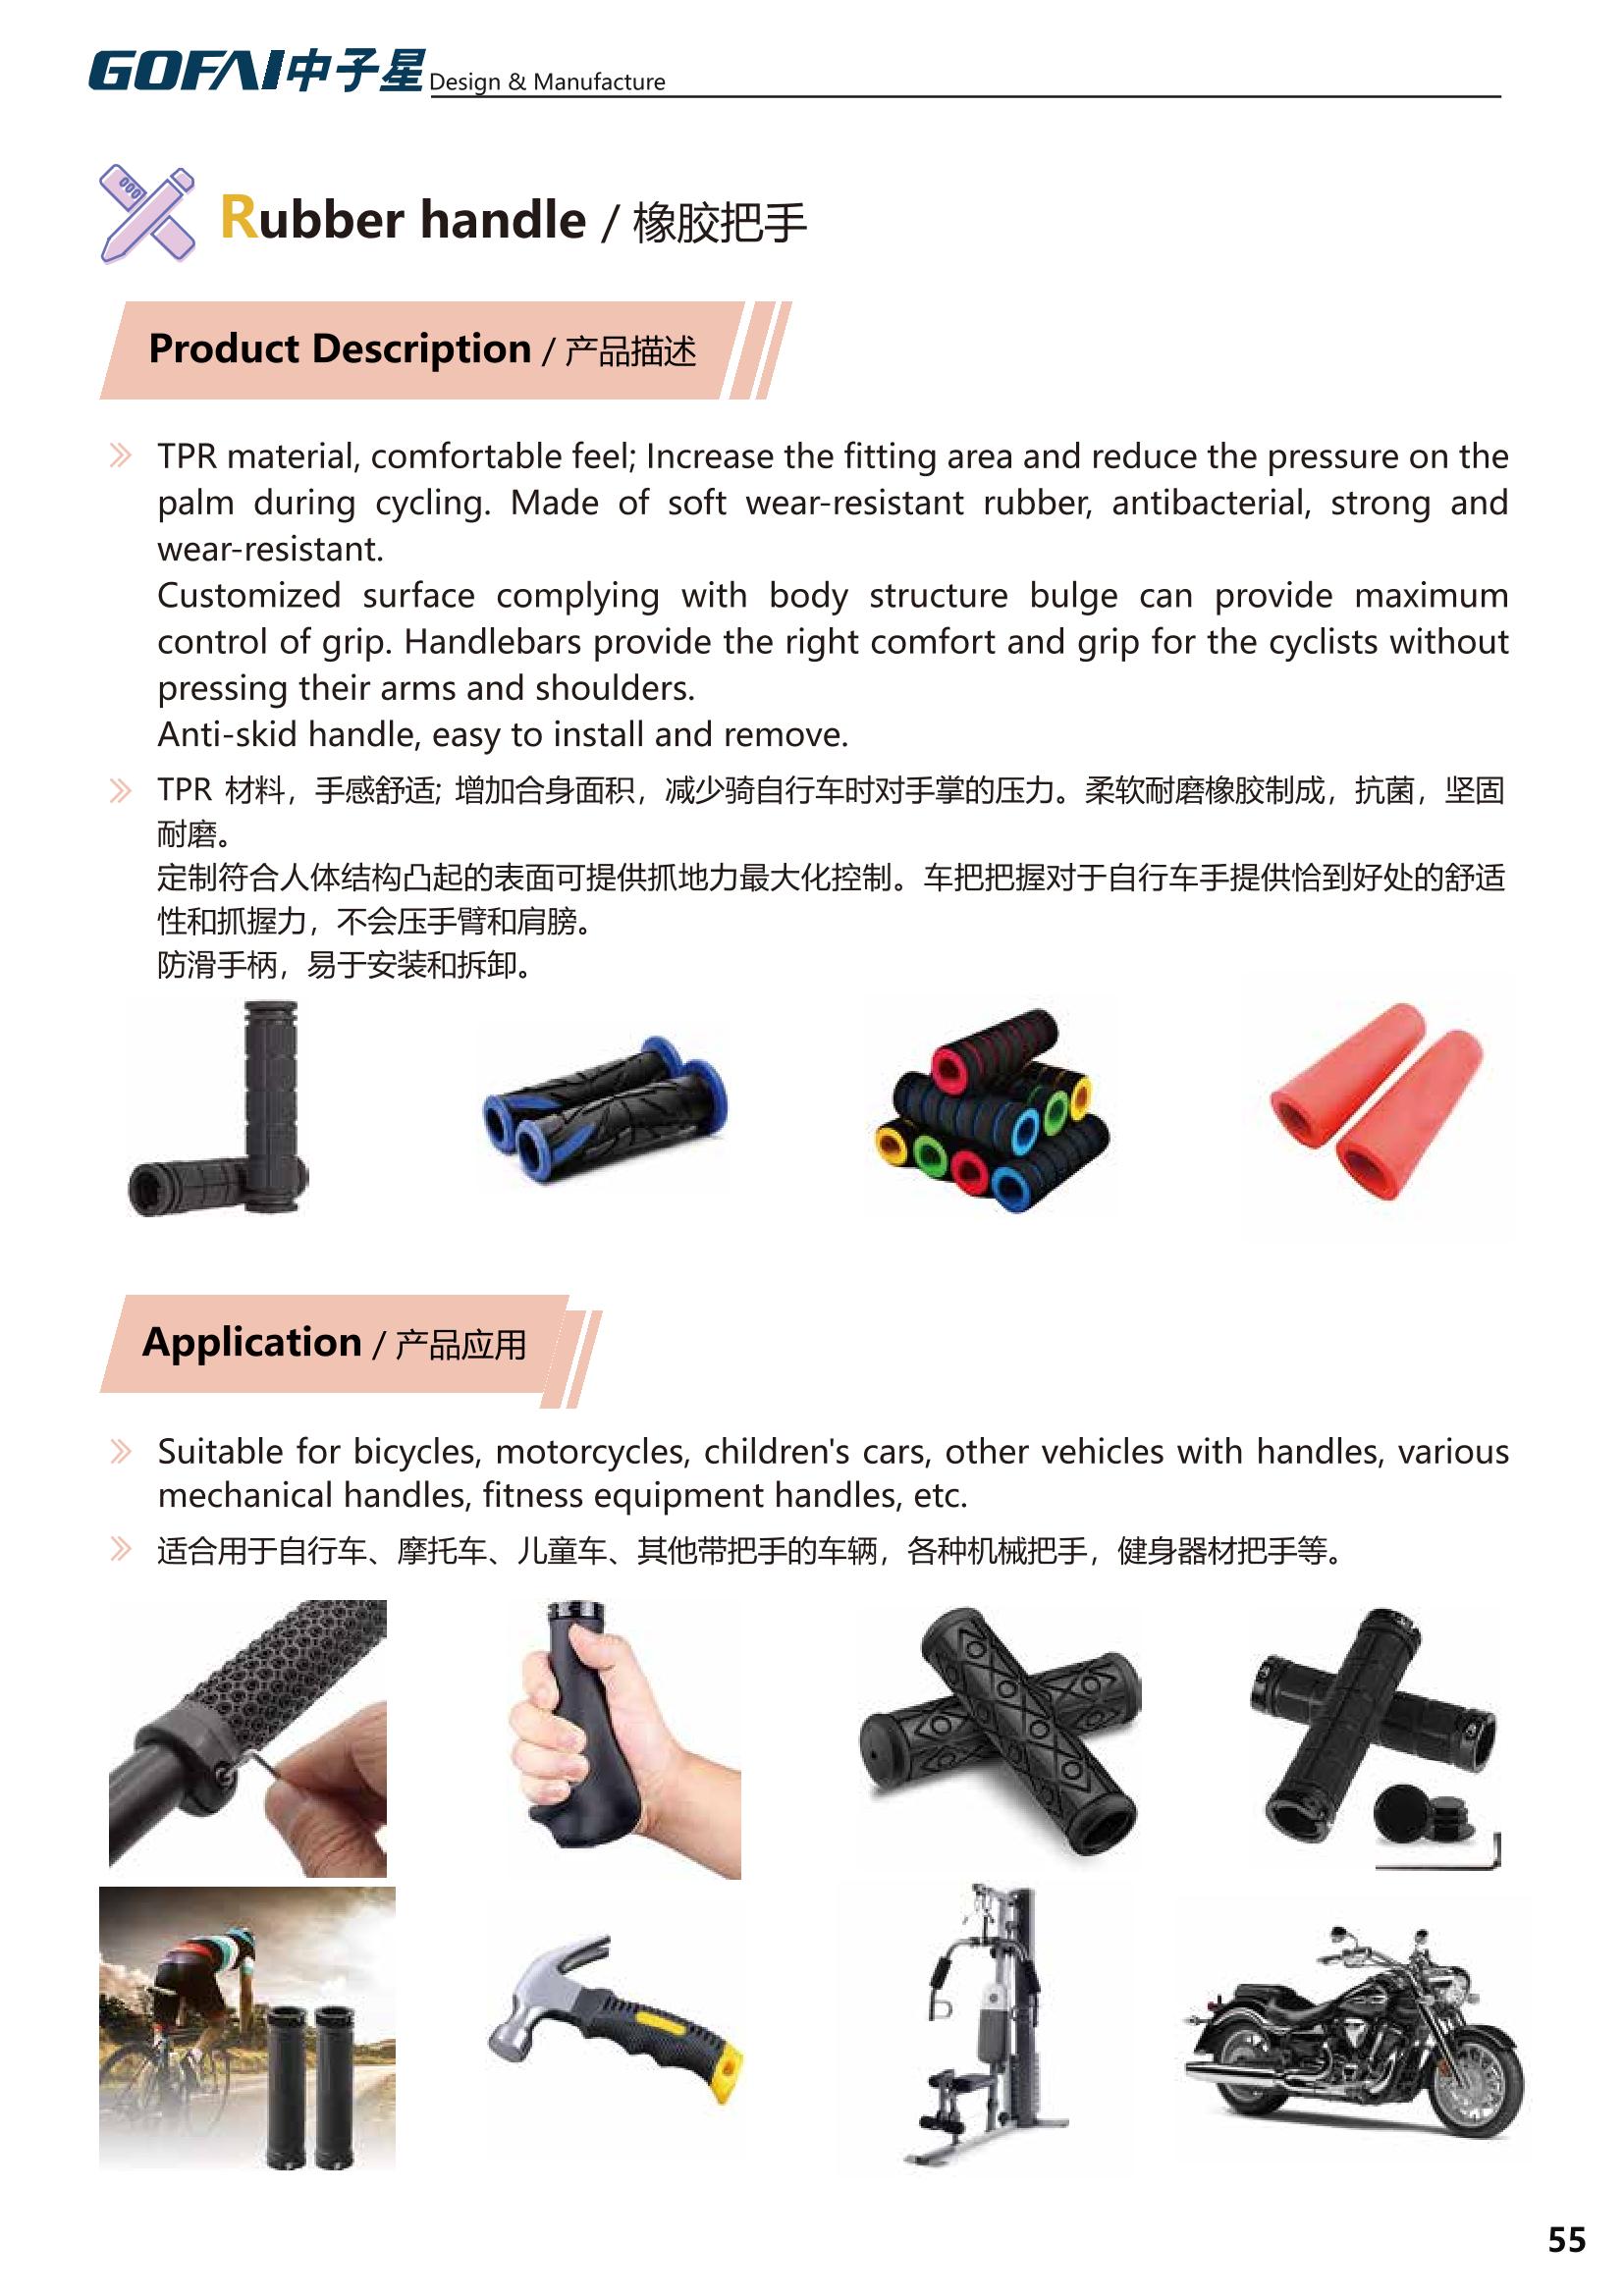 GOFAI product catalog_55.jpg